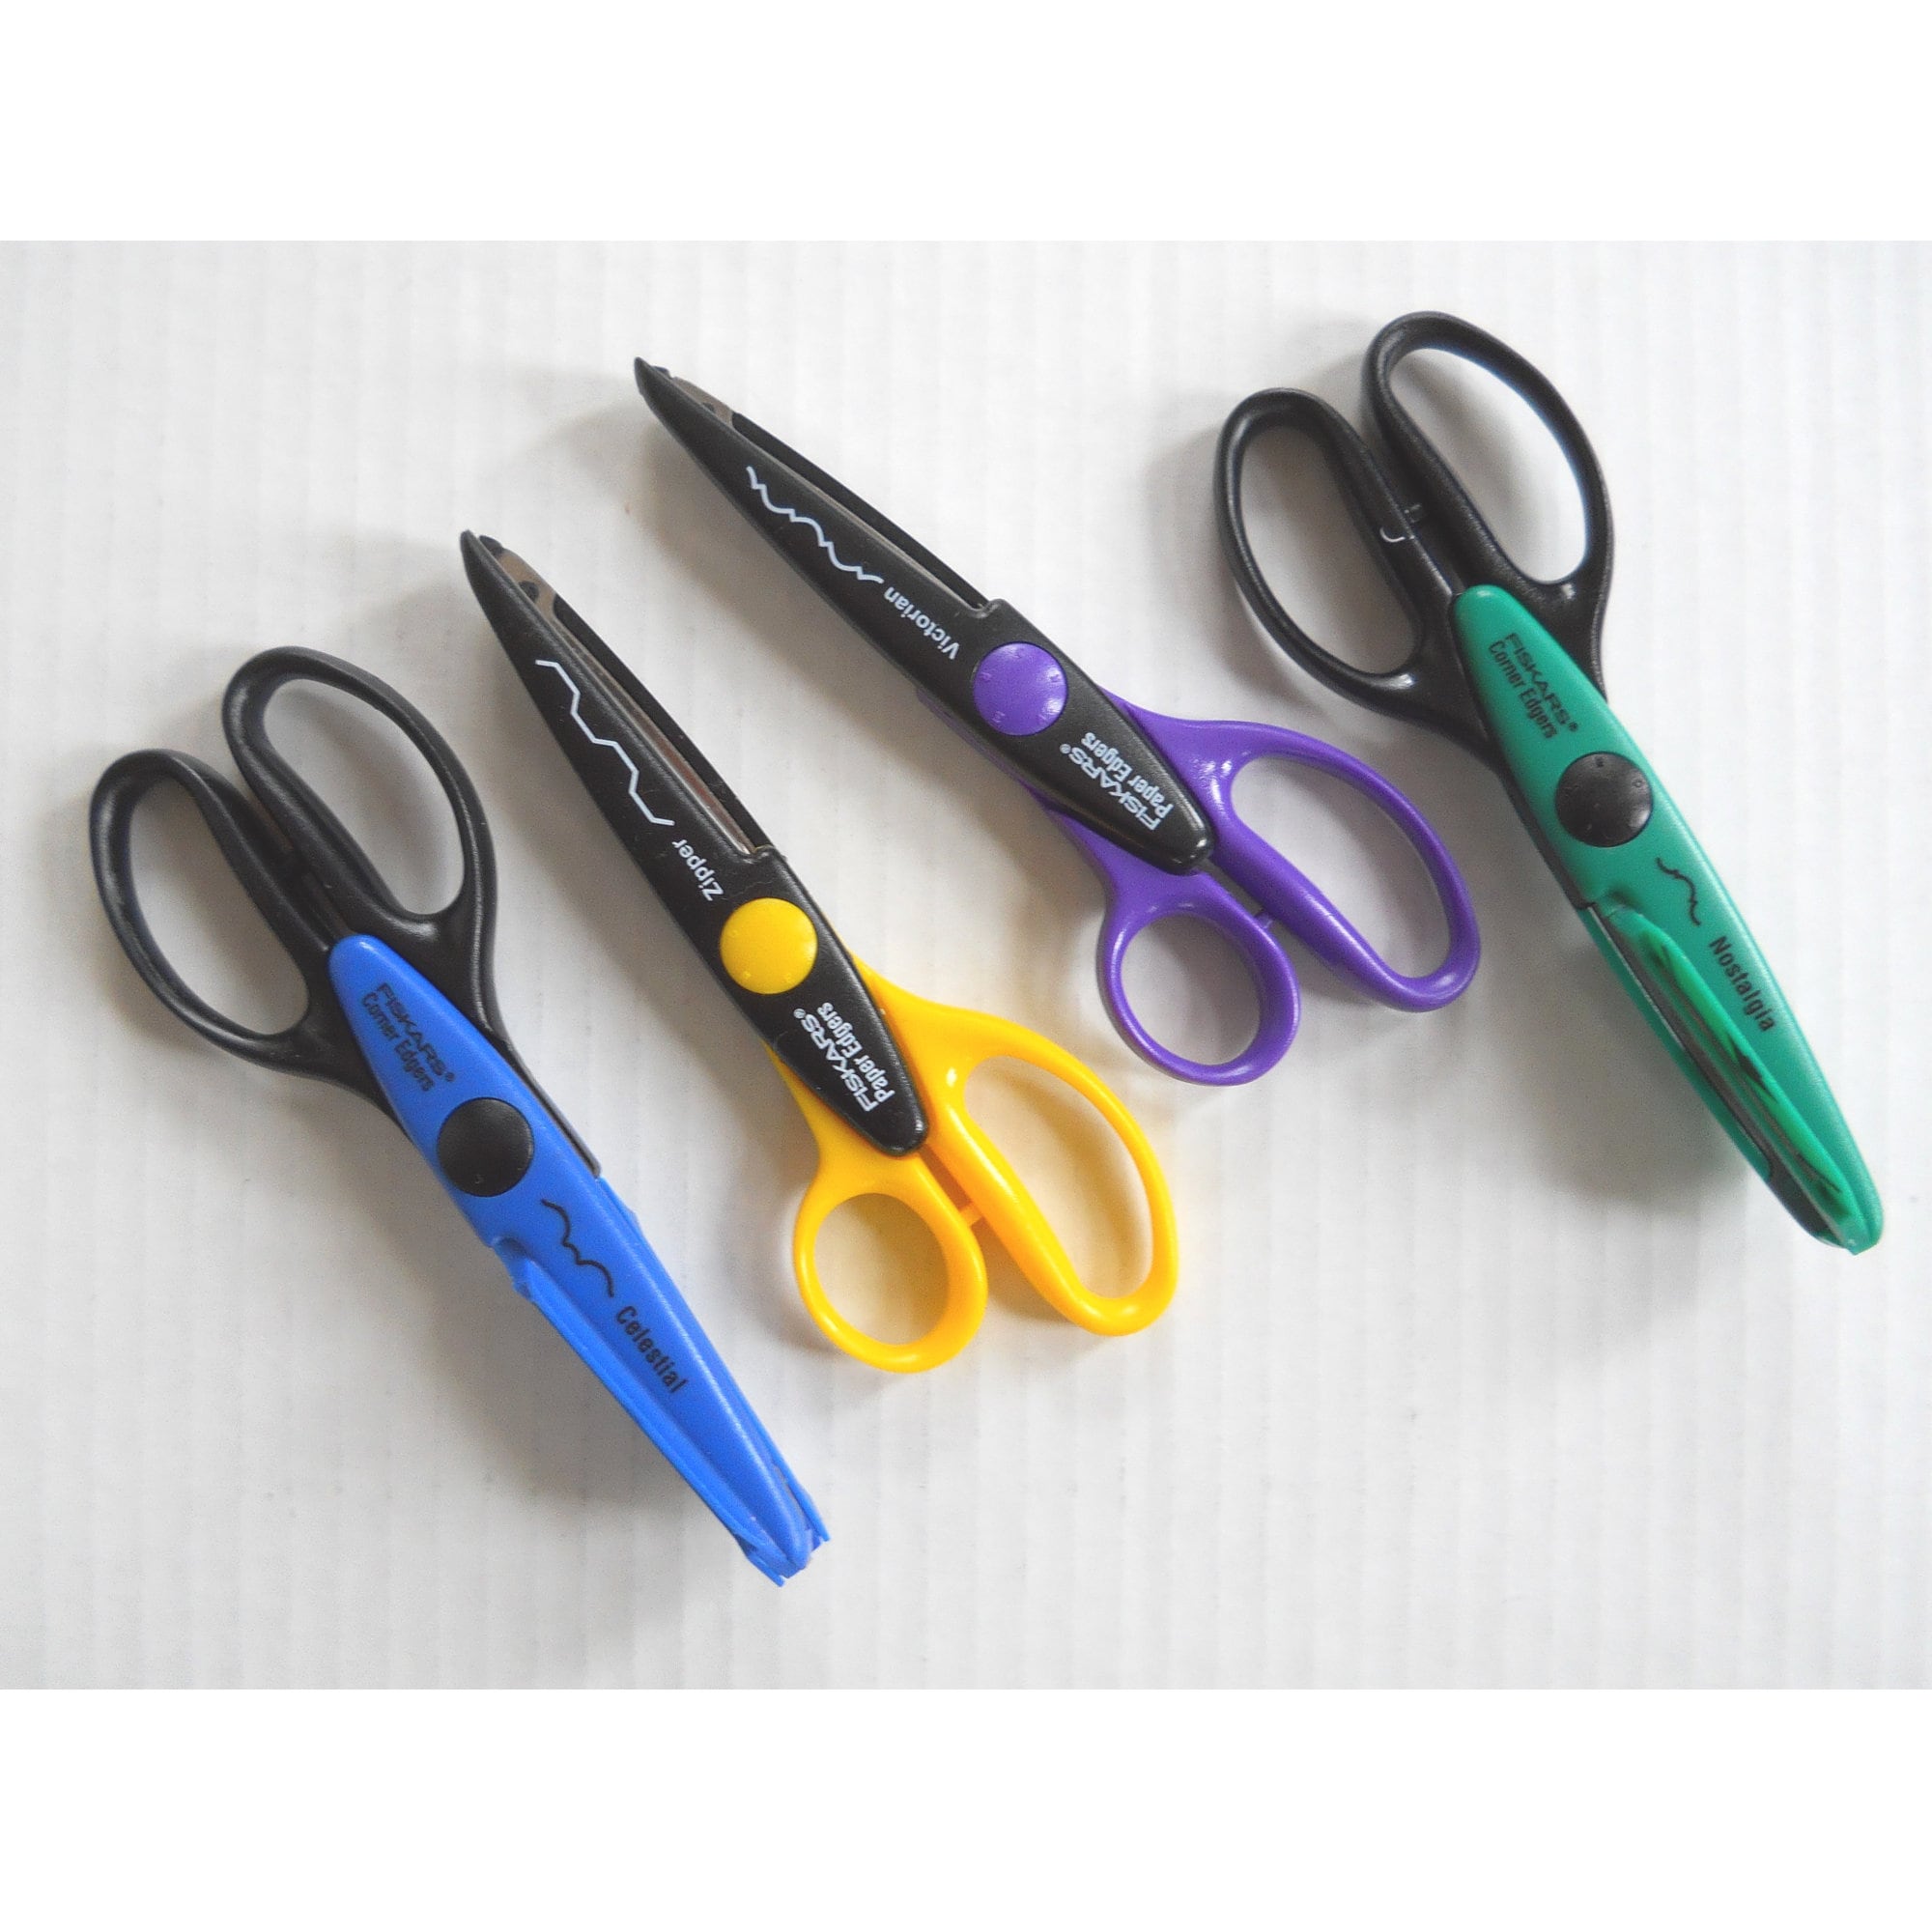 Arda Crazy Scissors For Decorative Cutting - Stationery